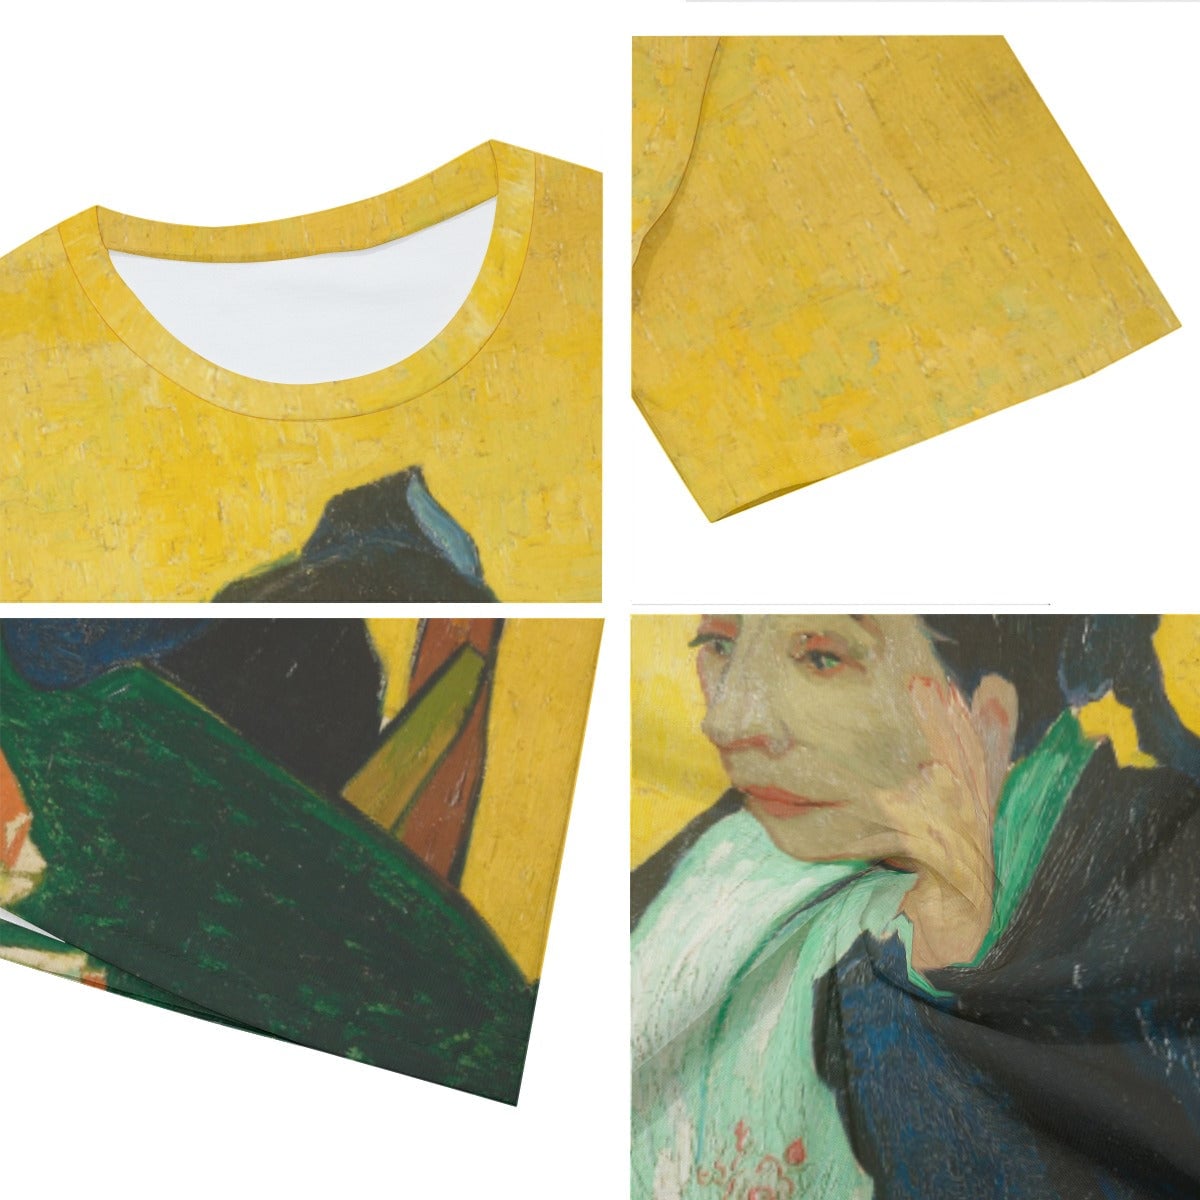 Madame Joseph by Vincent van Gogh T-Shirt